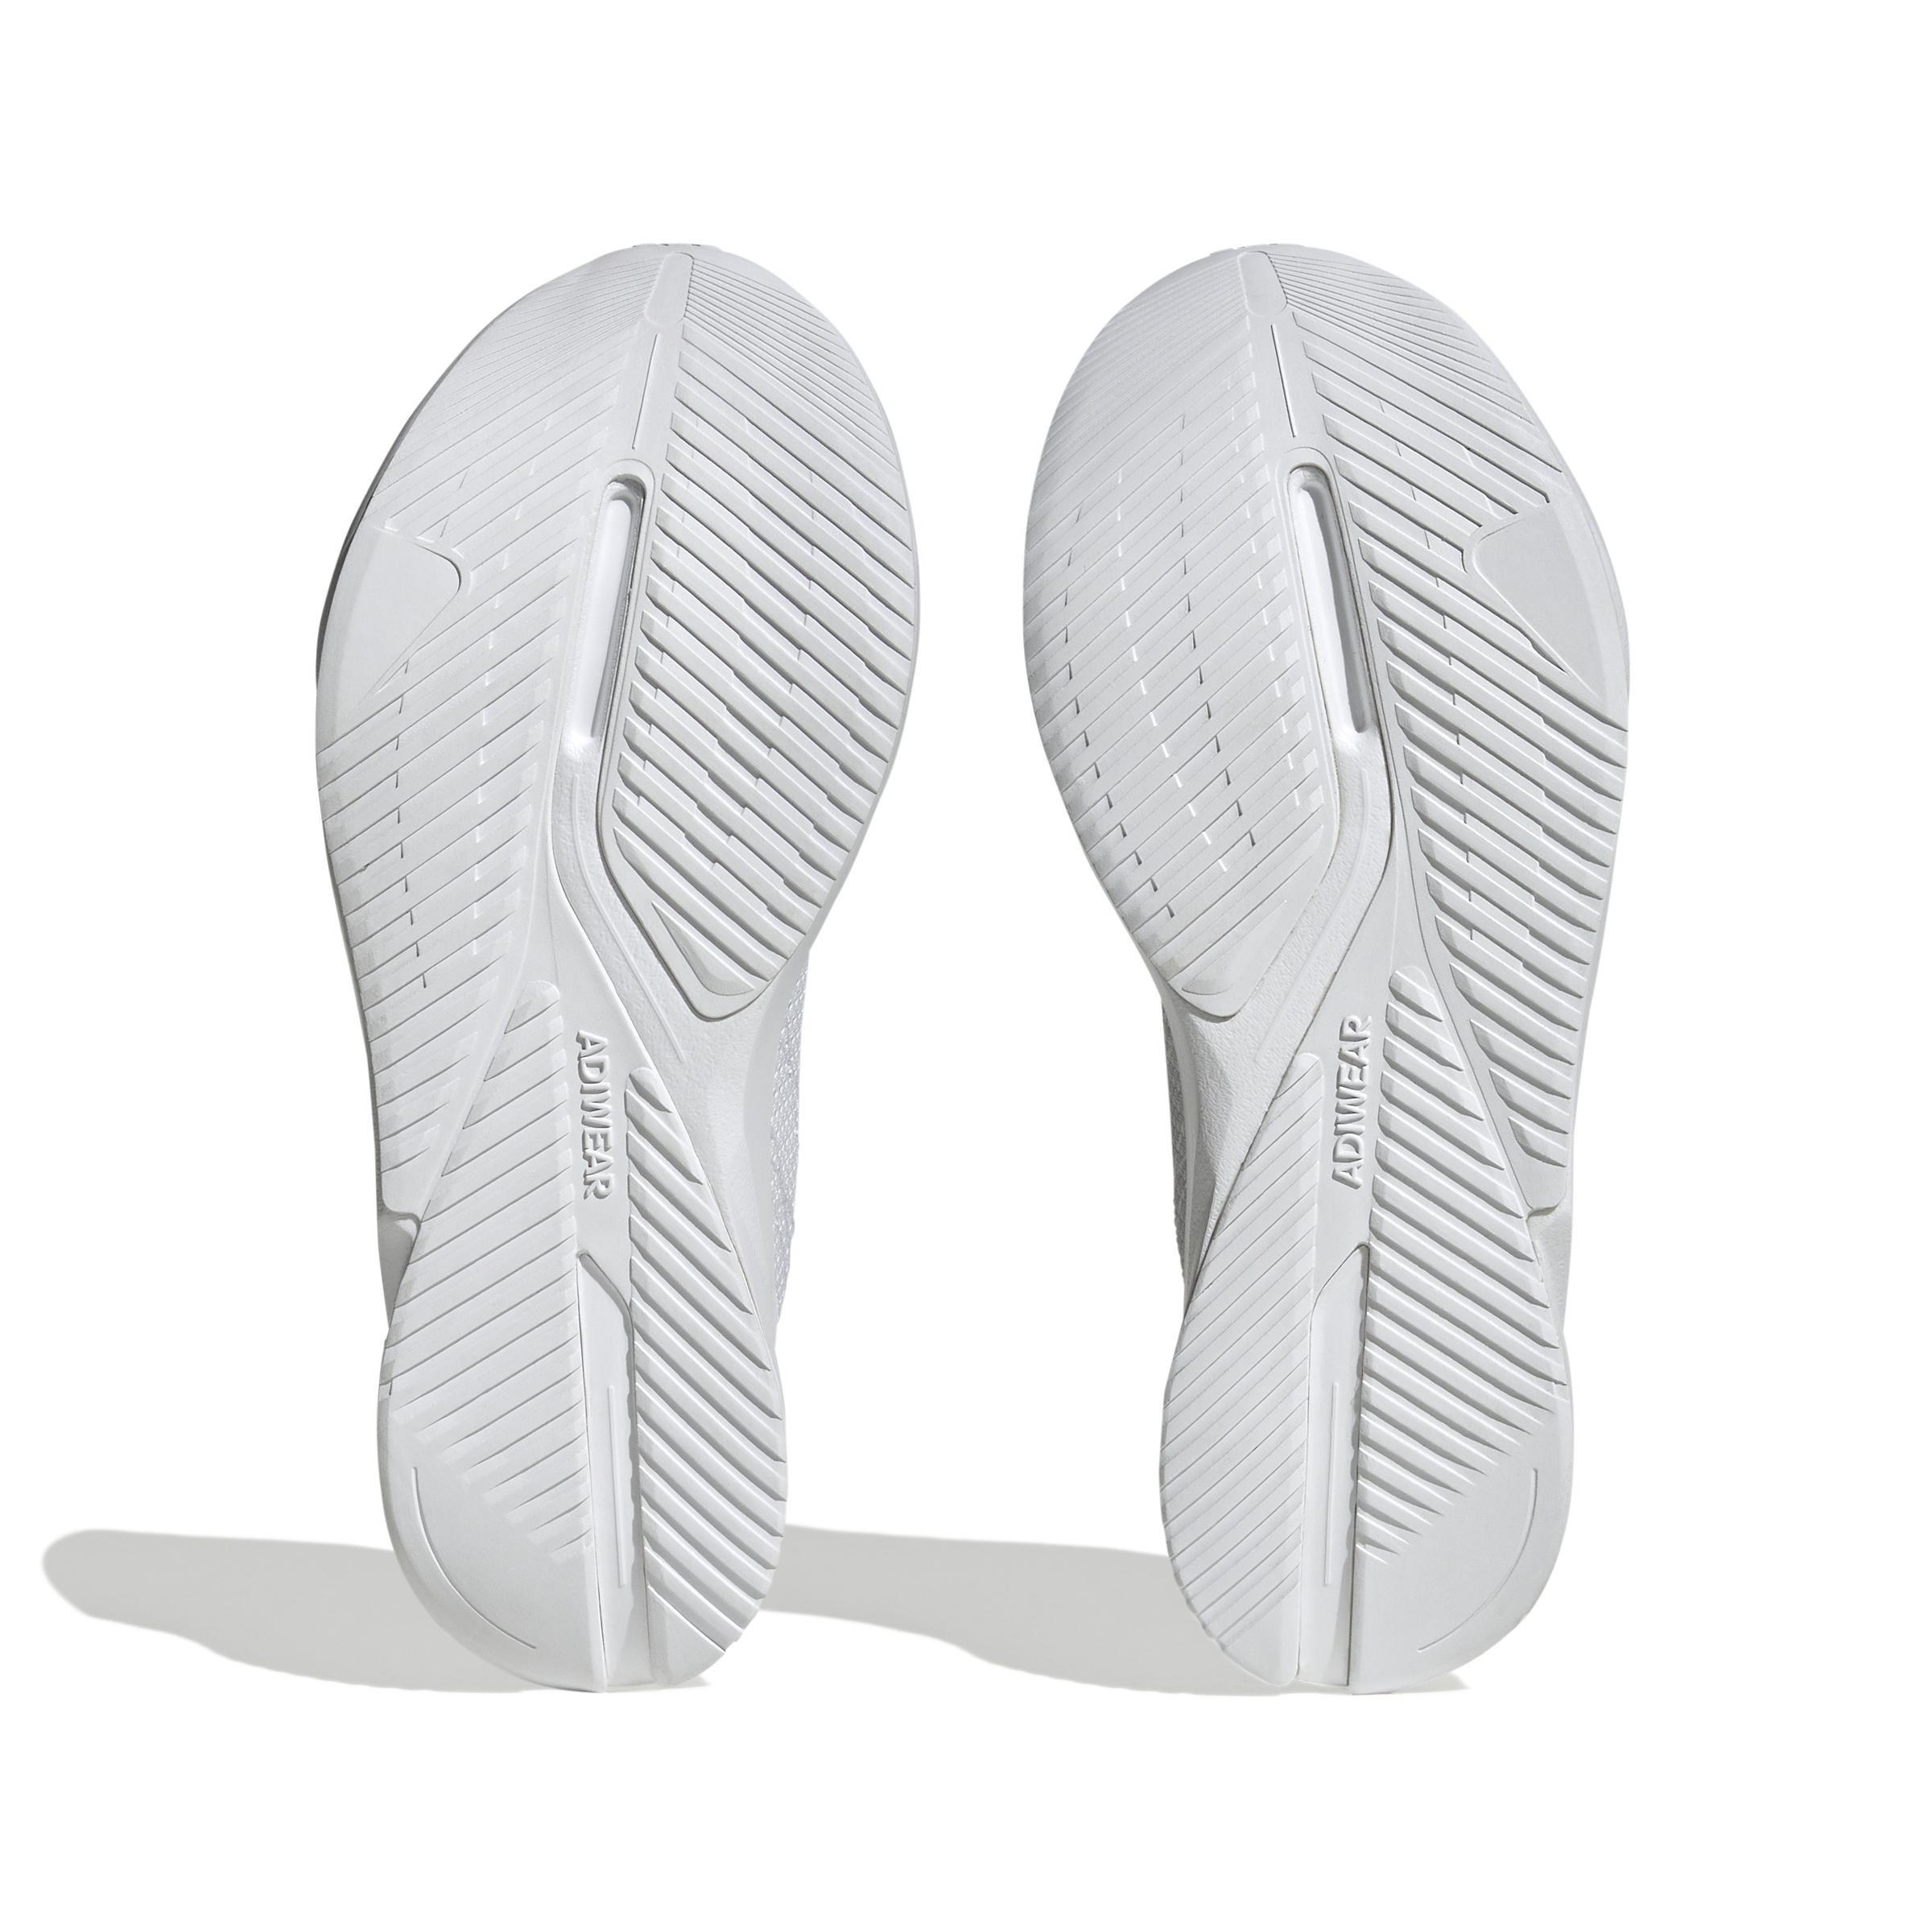 adidas - Women Duramo Sl Shoes, White